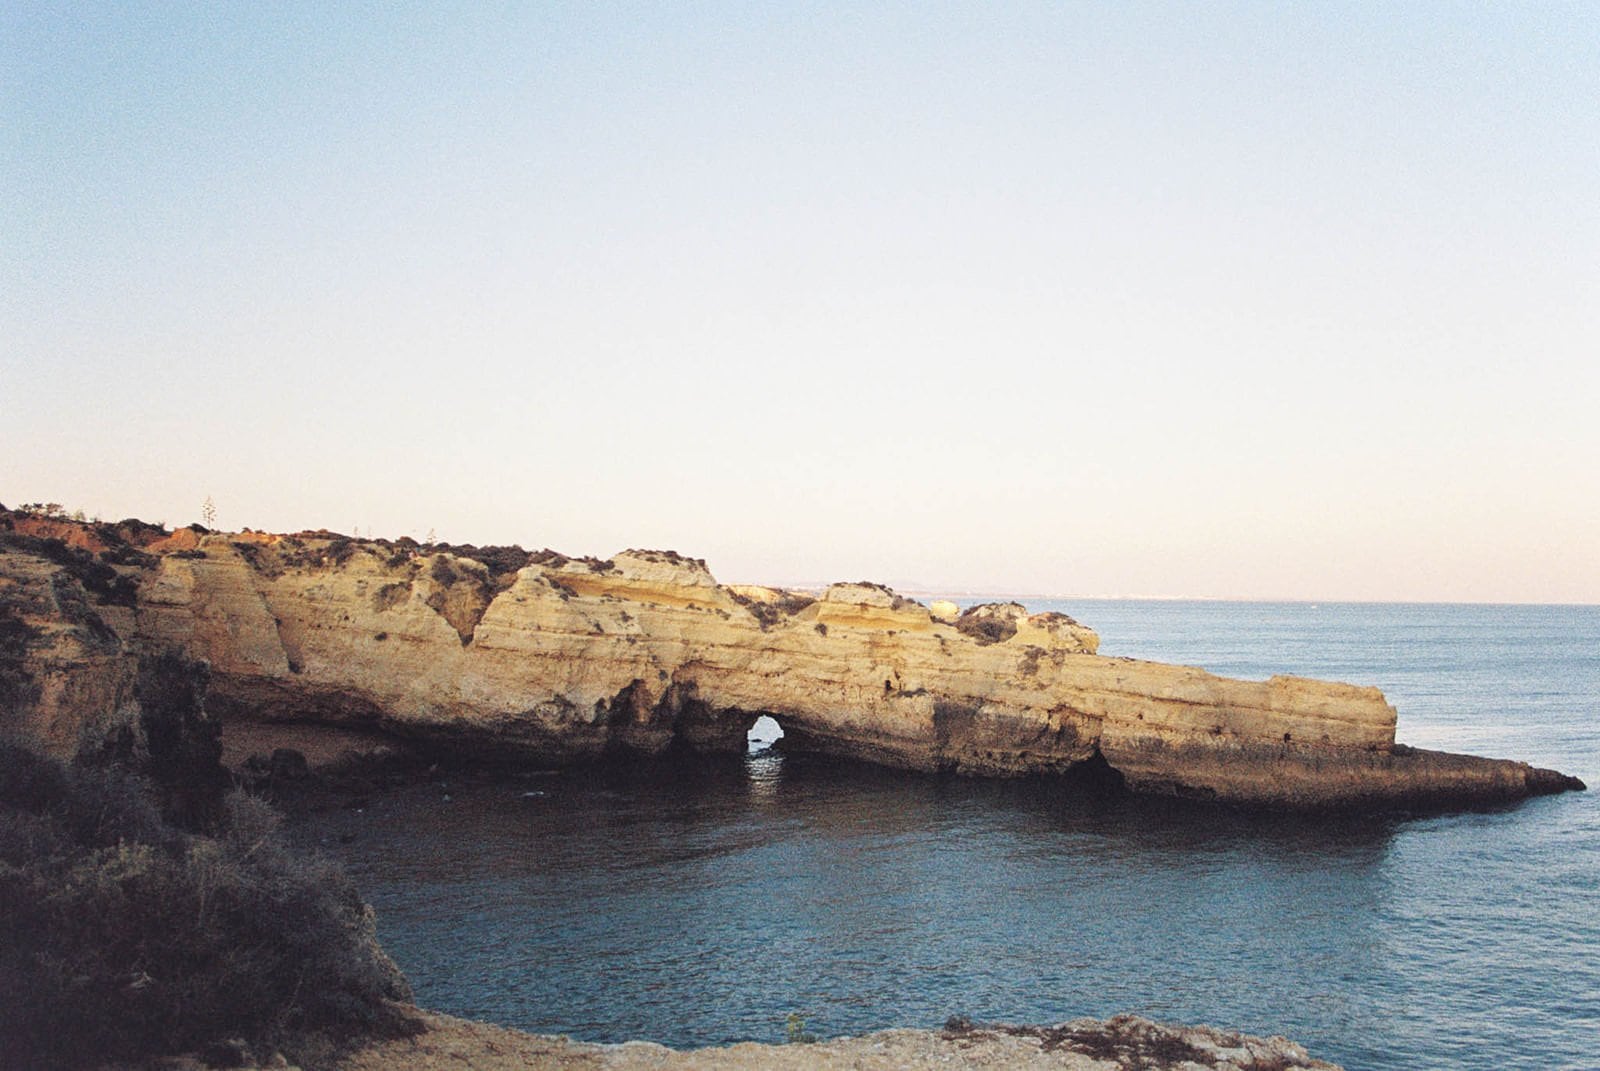 Portugal cliffside views